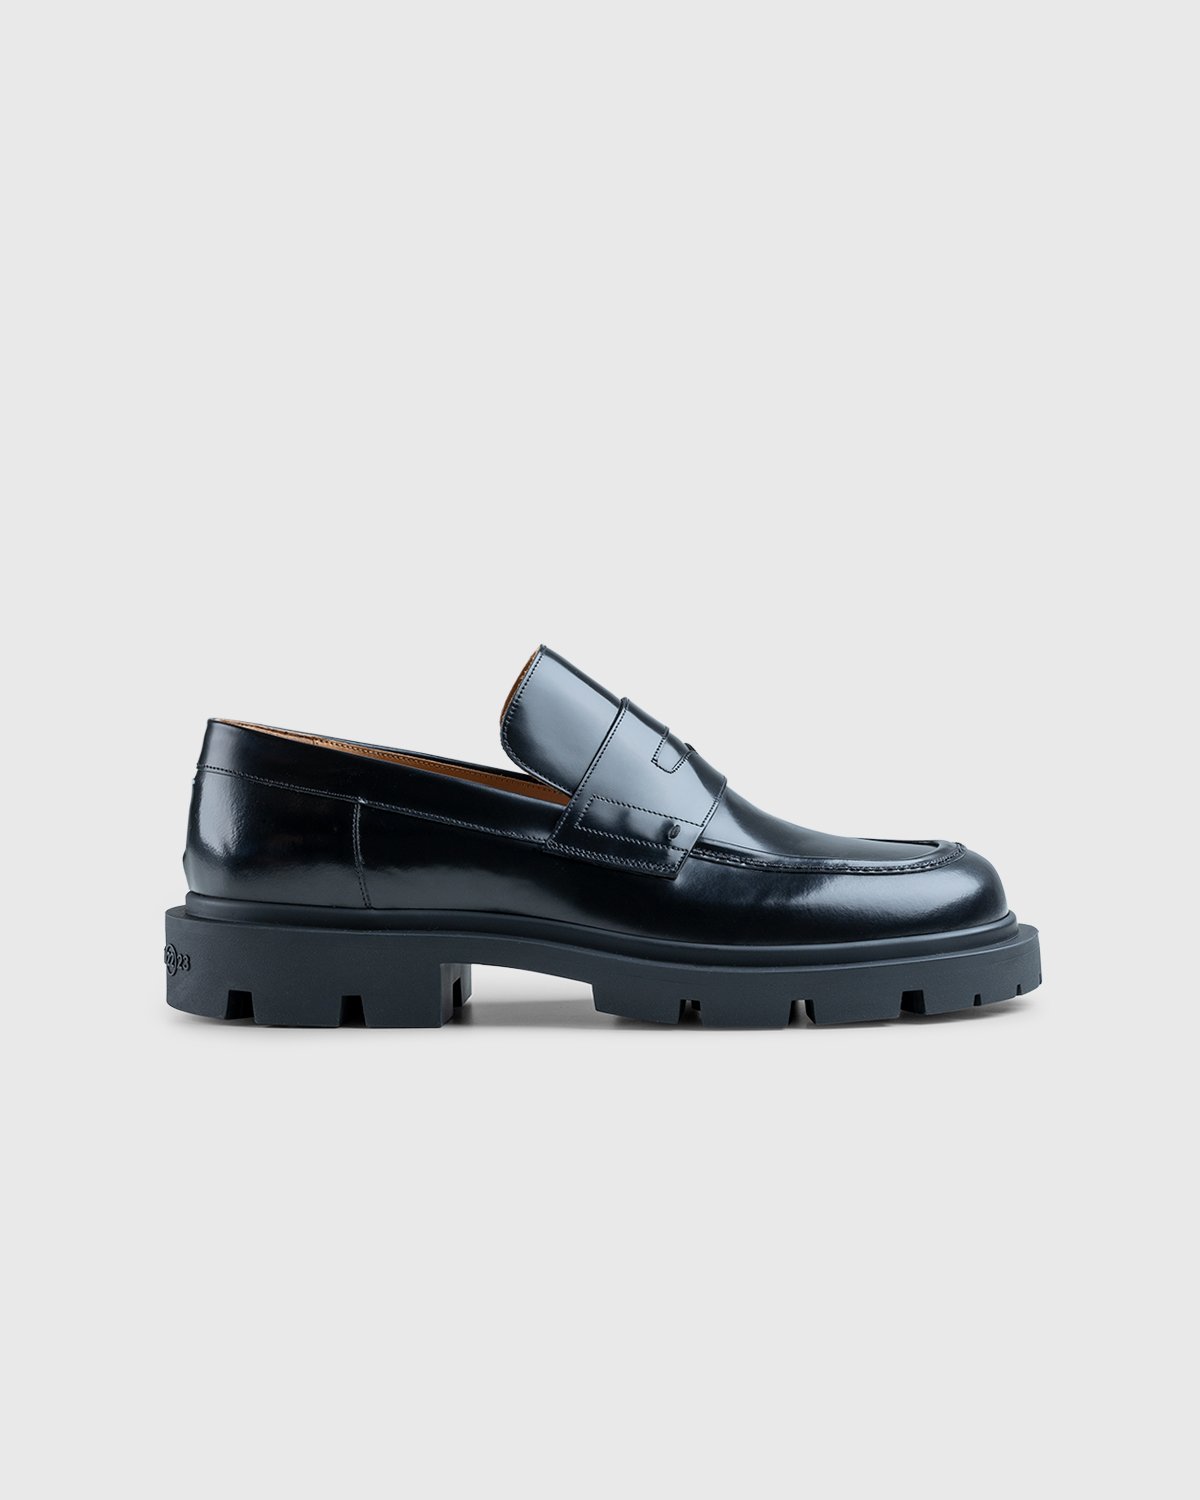 Maison Margiela - Leather Loafers Black - Footwear - Black - Image 1